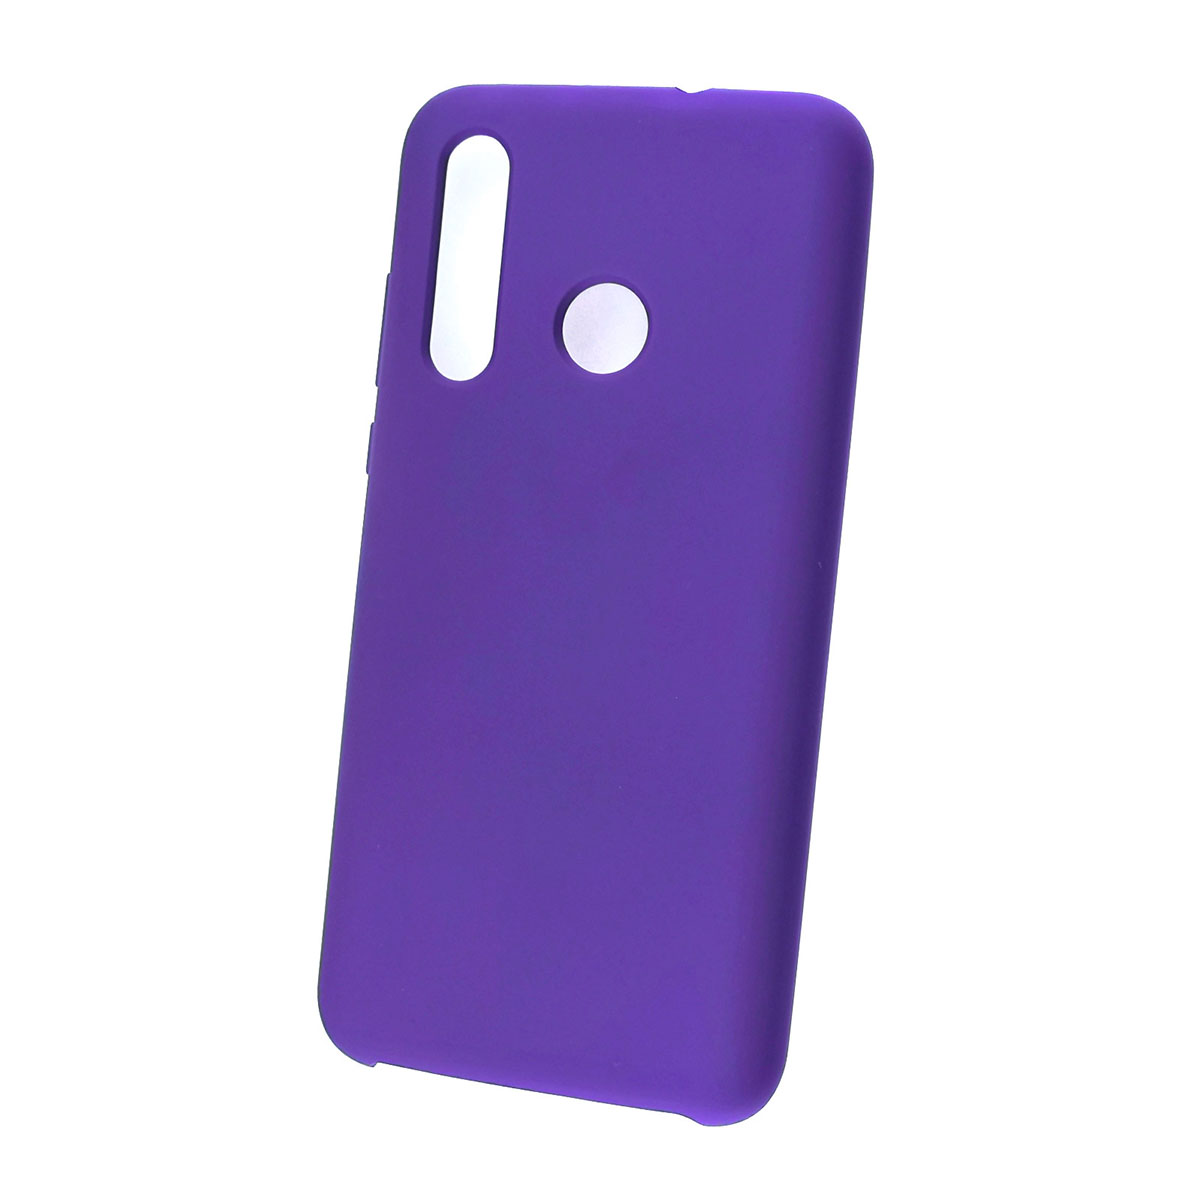 Чехол накладка для HUAWEI Nova 4 2019 (VCE-LX1), силикон, бархат, цвет фиолетовый.